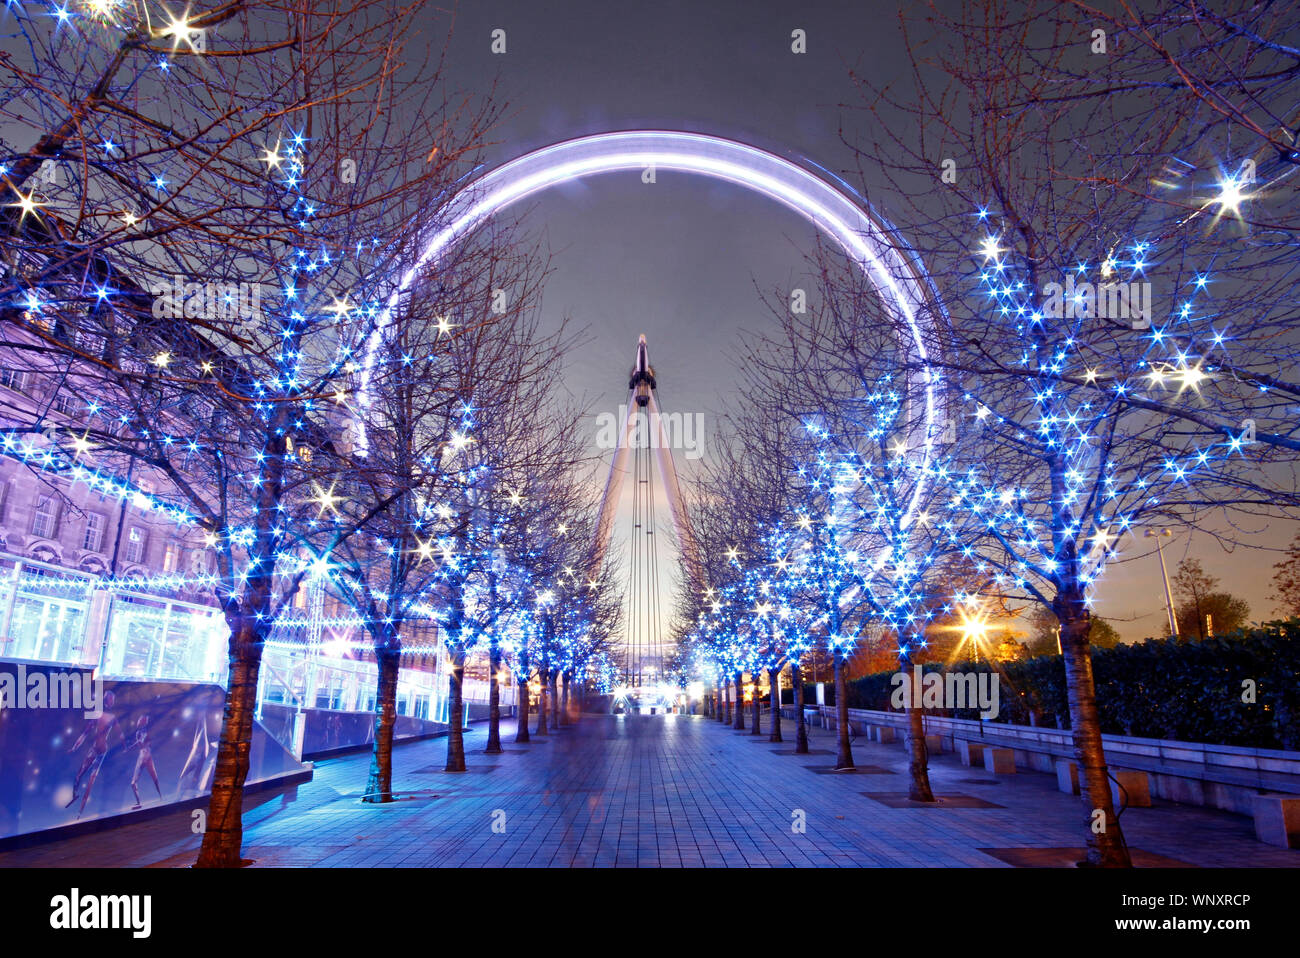 London - london Eye - Pepsi Stock Photo